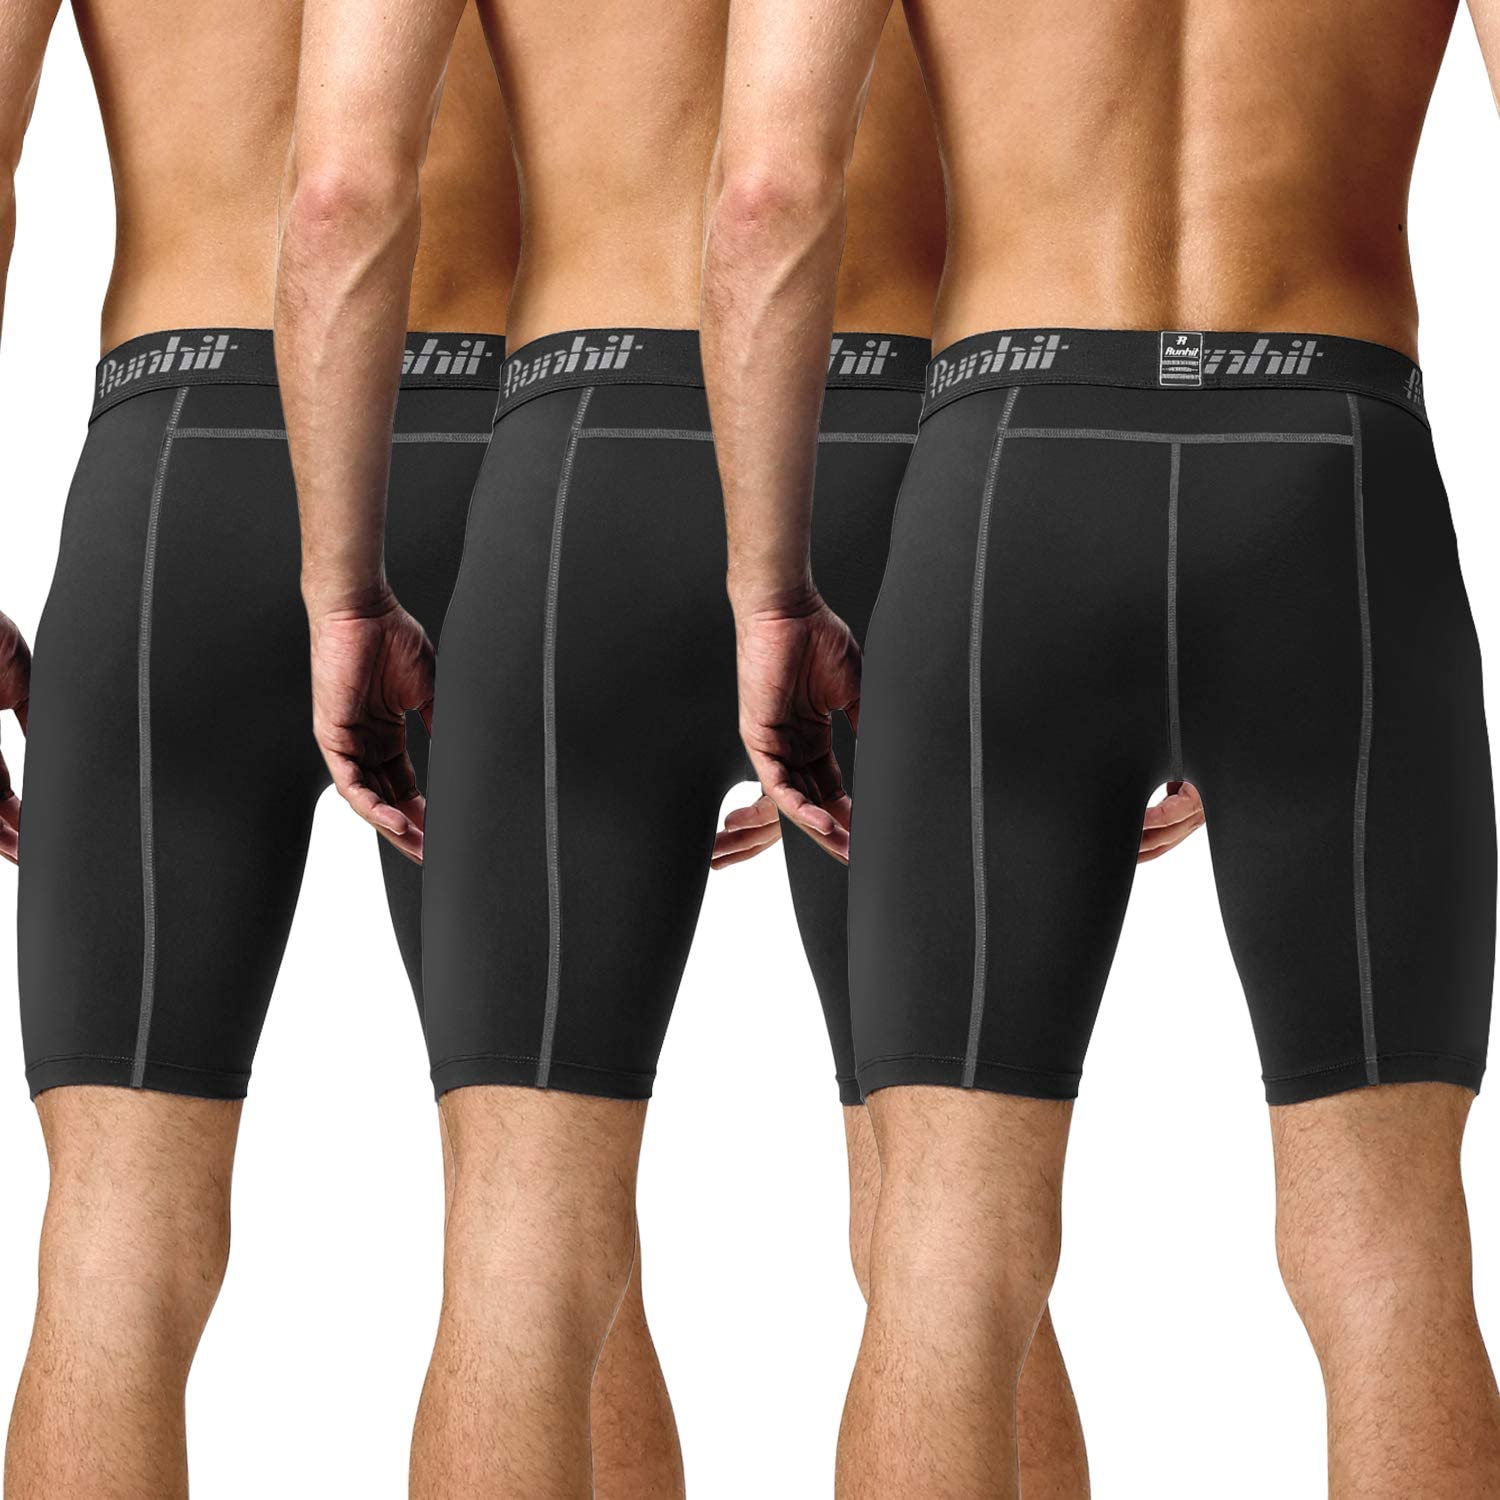 Runhit Compression Shorts for Men,Mens Underwear Spandex Shorts Workout ...